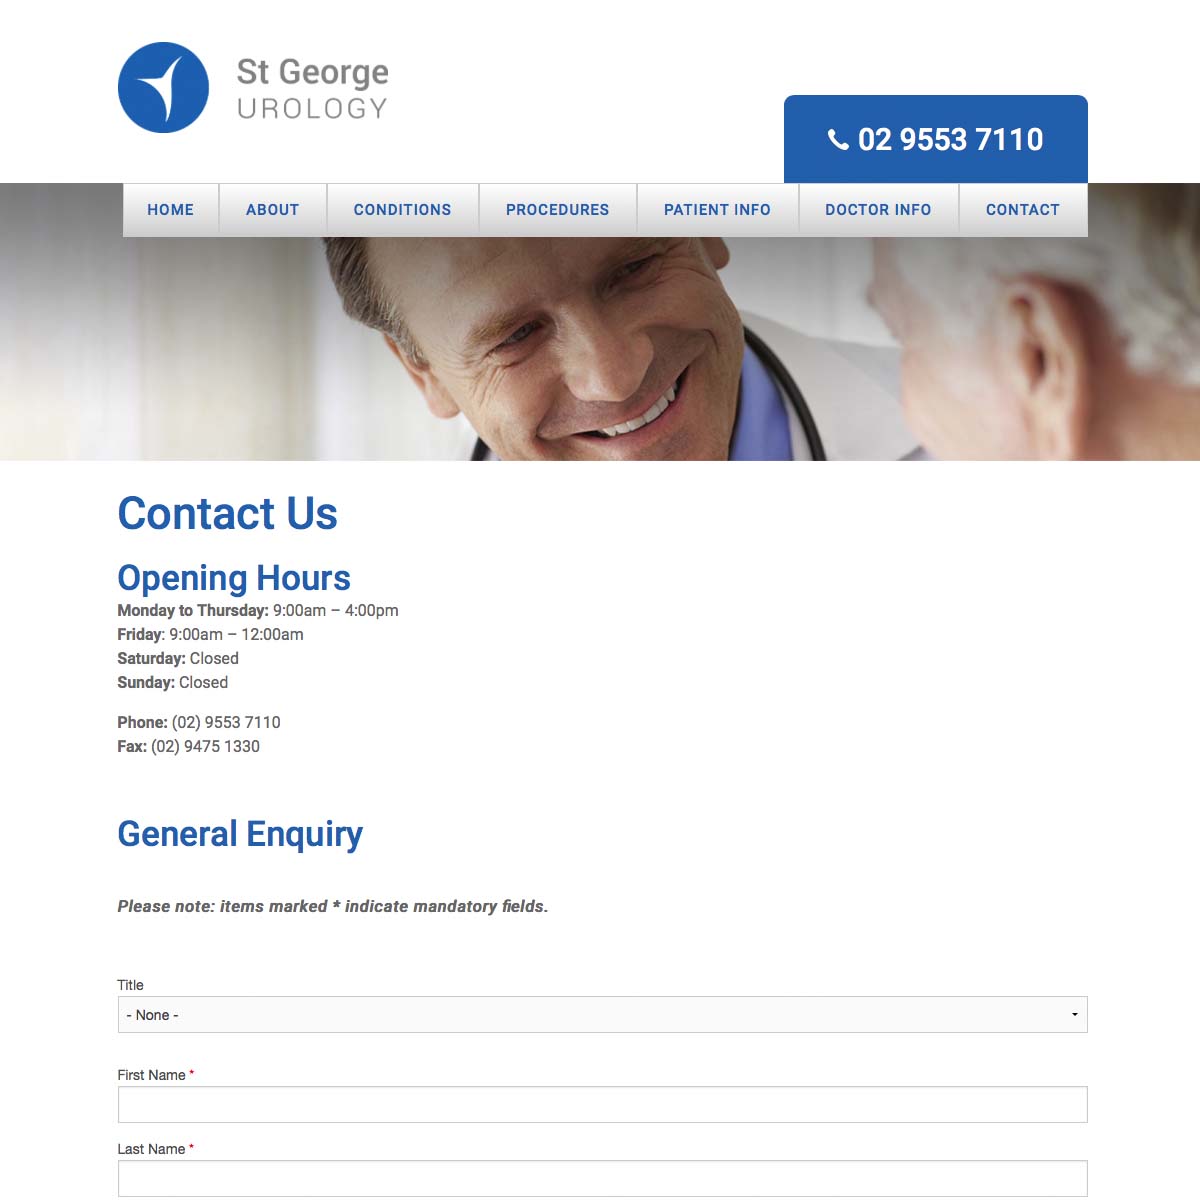 St George Urology Contact Us